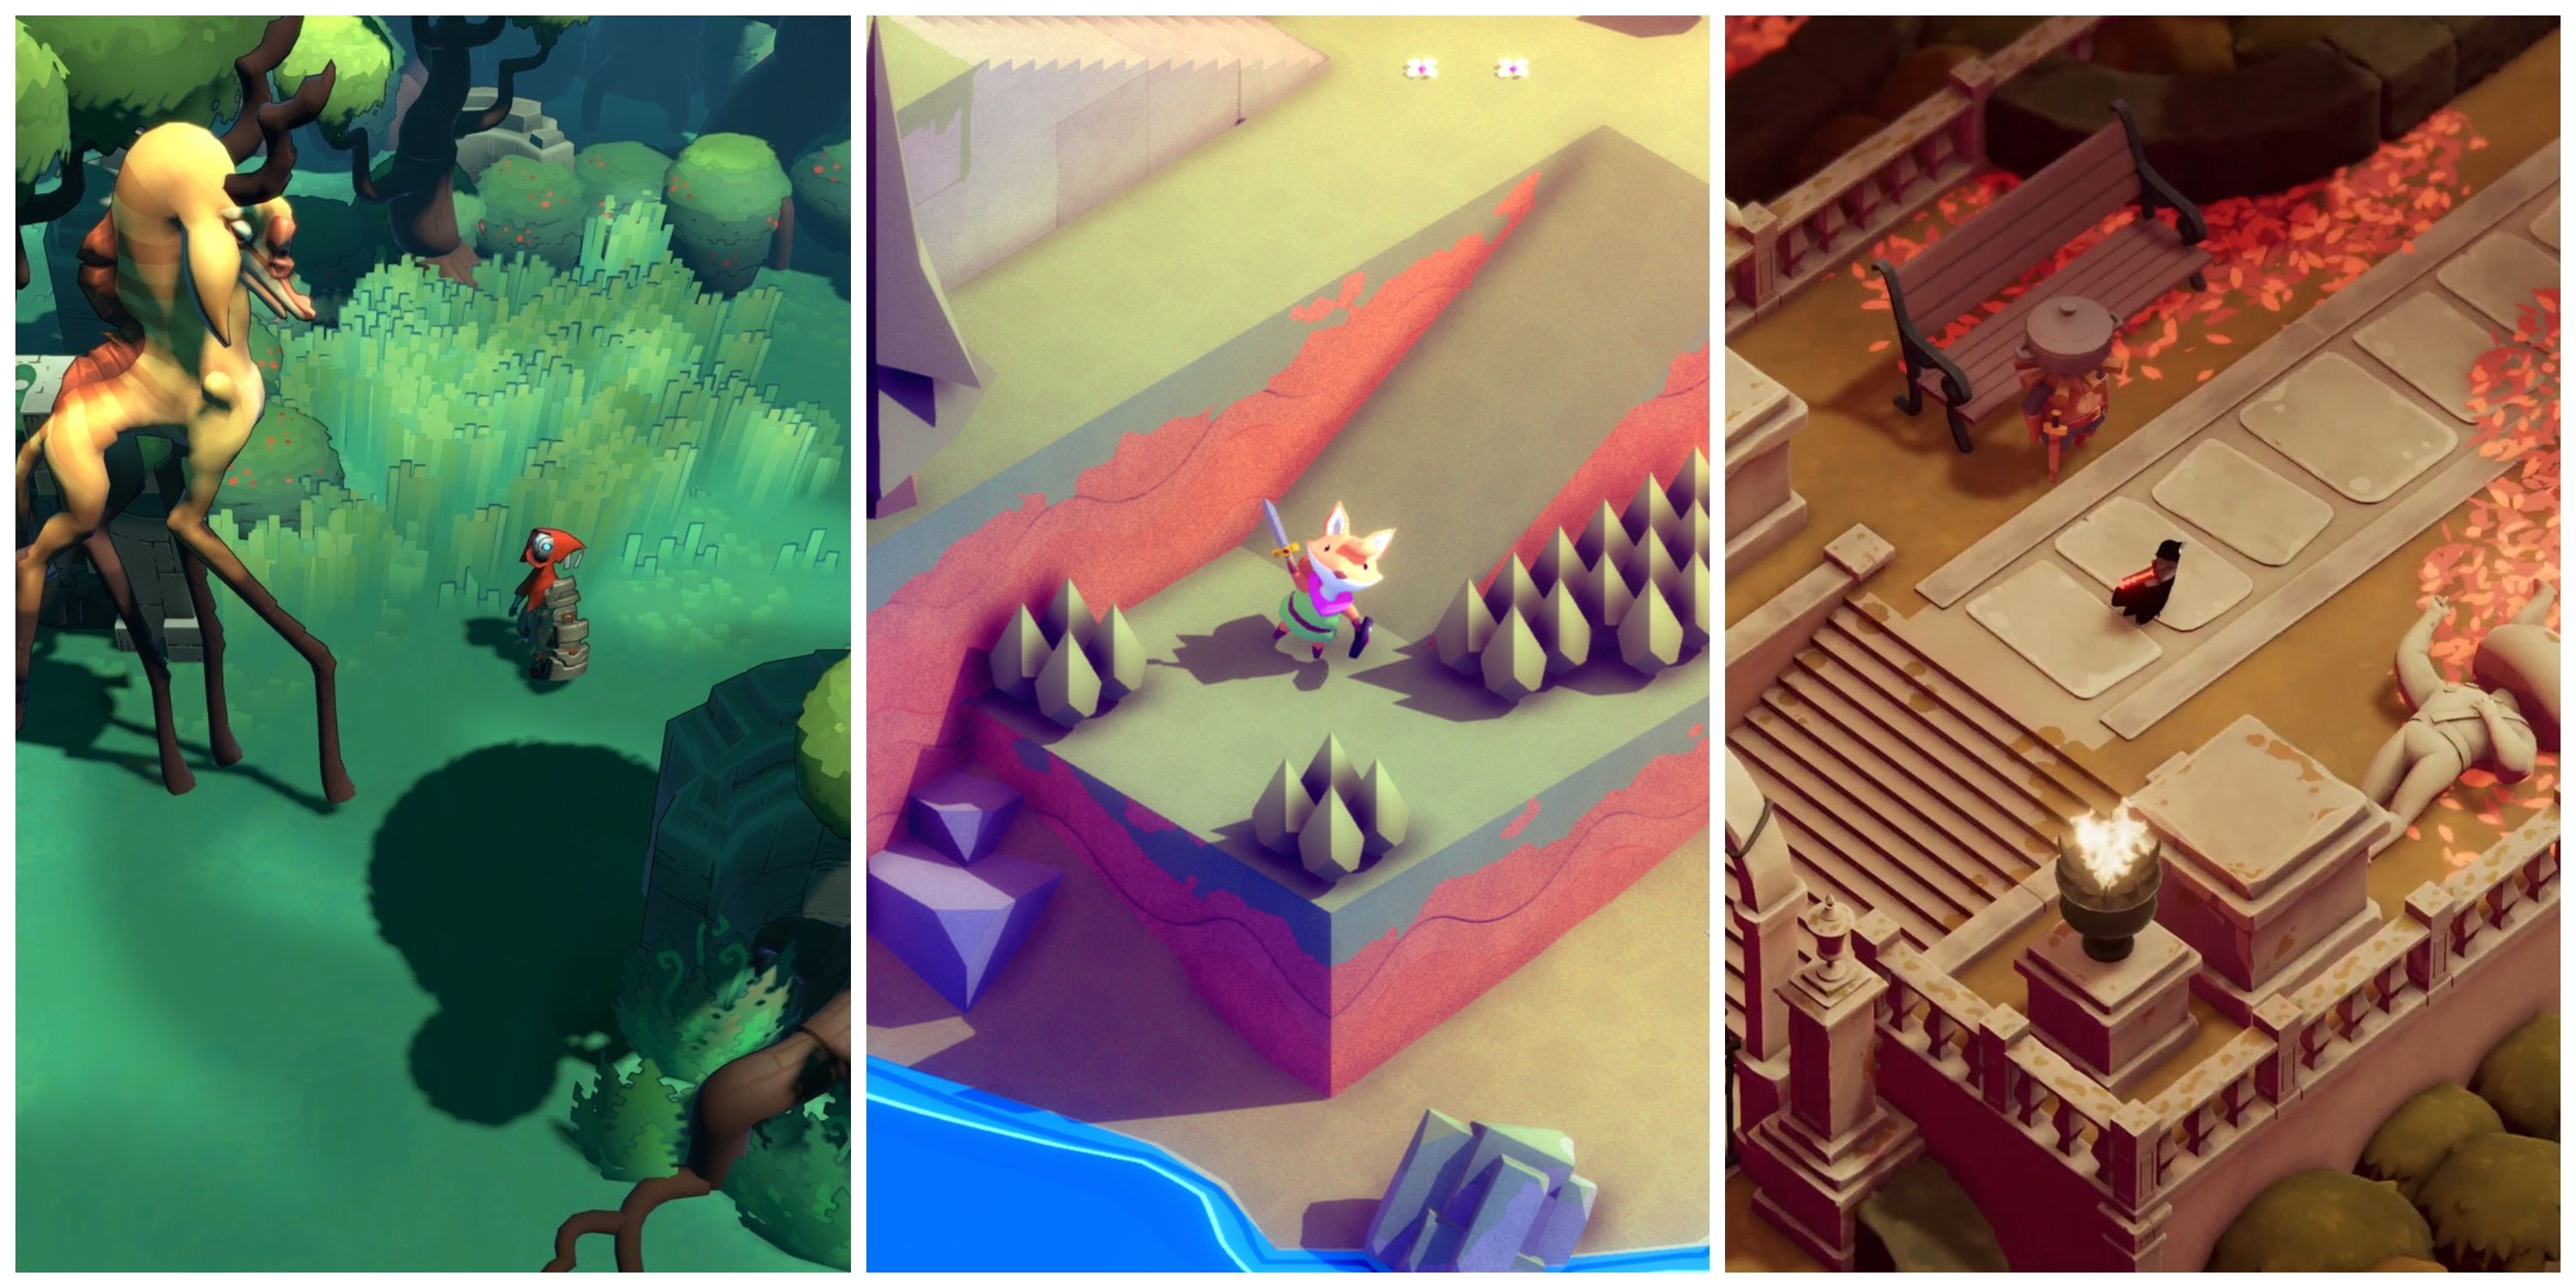 Best Indie Games Inspired By Zelda (Featured Image) - Various screenshots